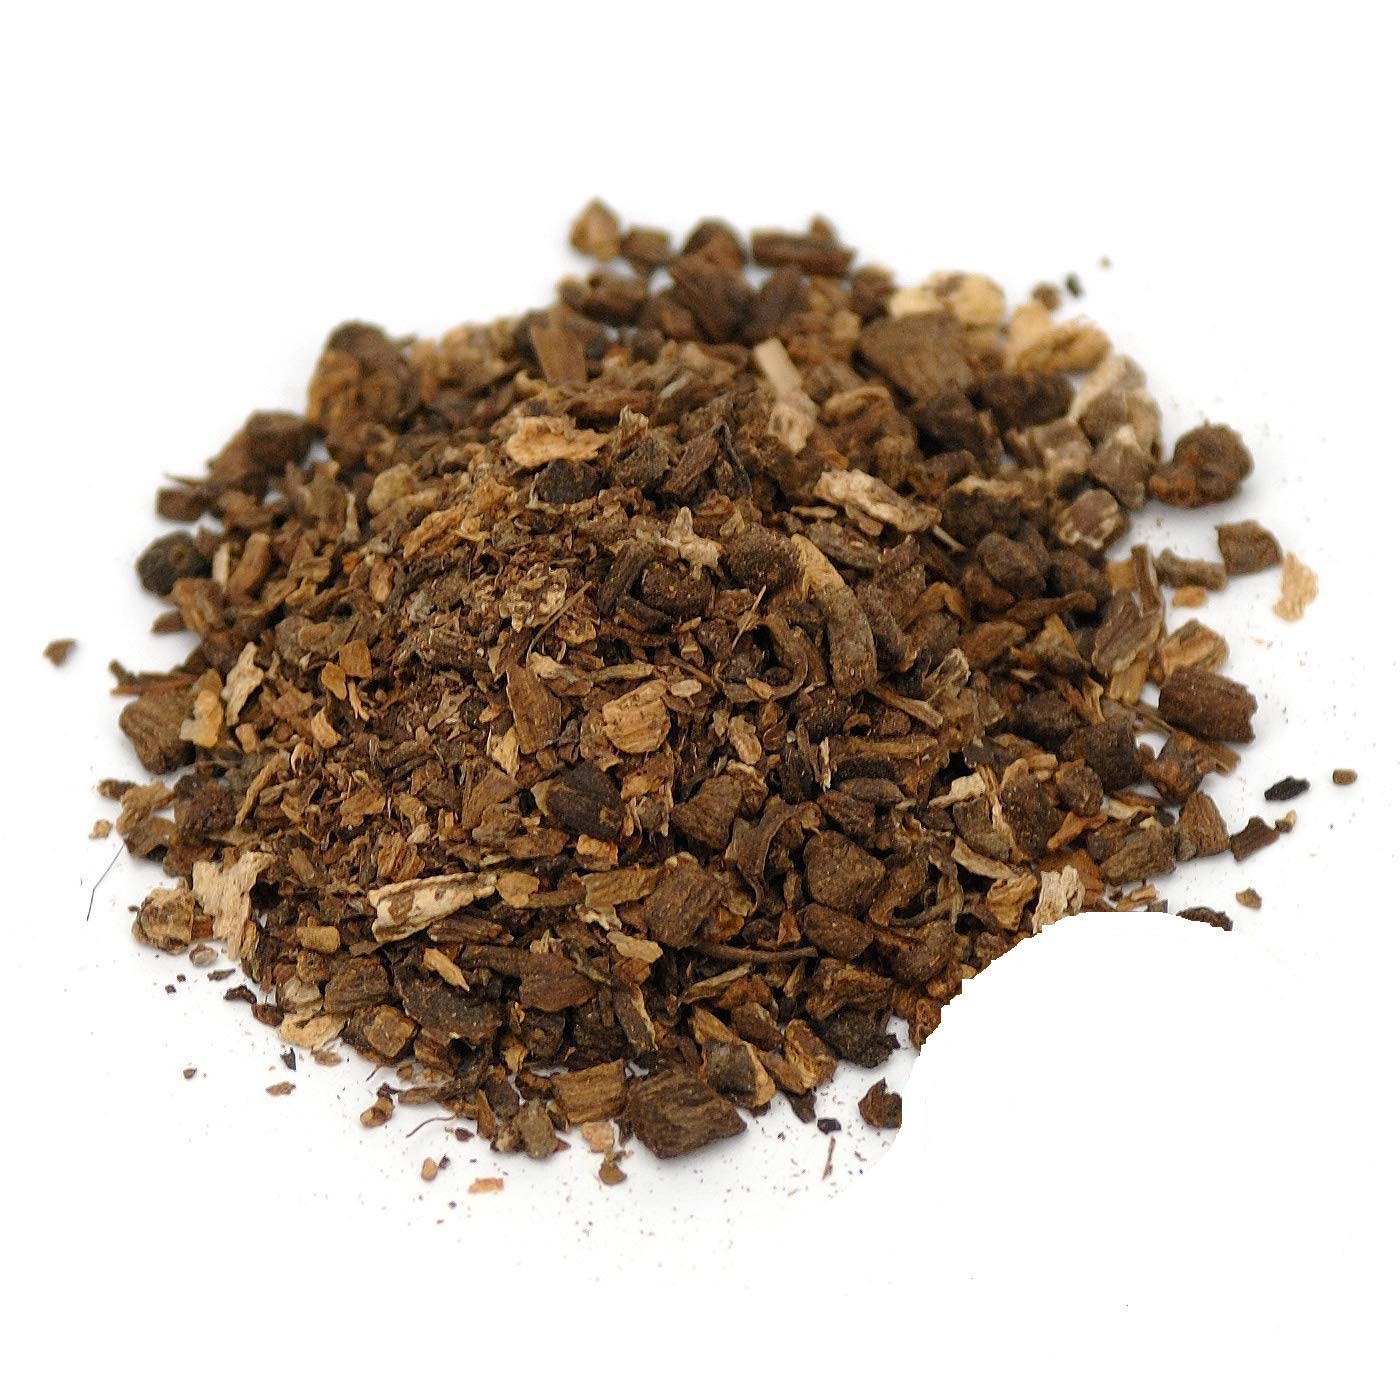 Starwest Botanicals Organic Dandelion Root Roasted Cut [4 Ounces] Loose Tea in Bulk